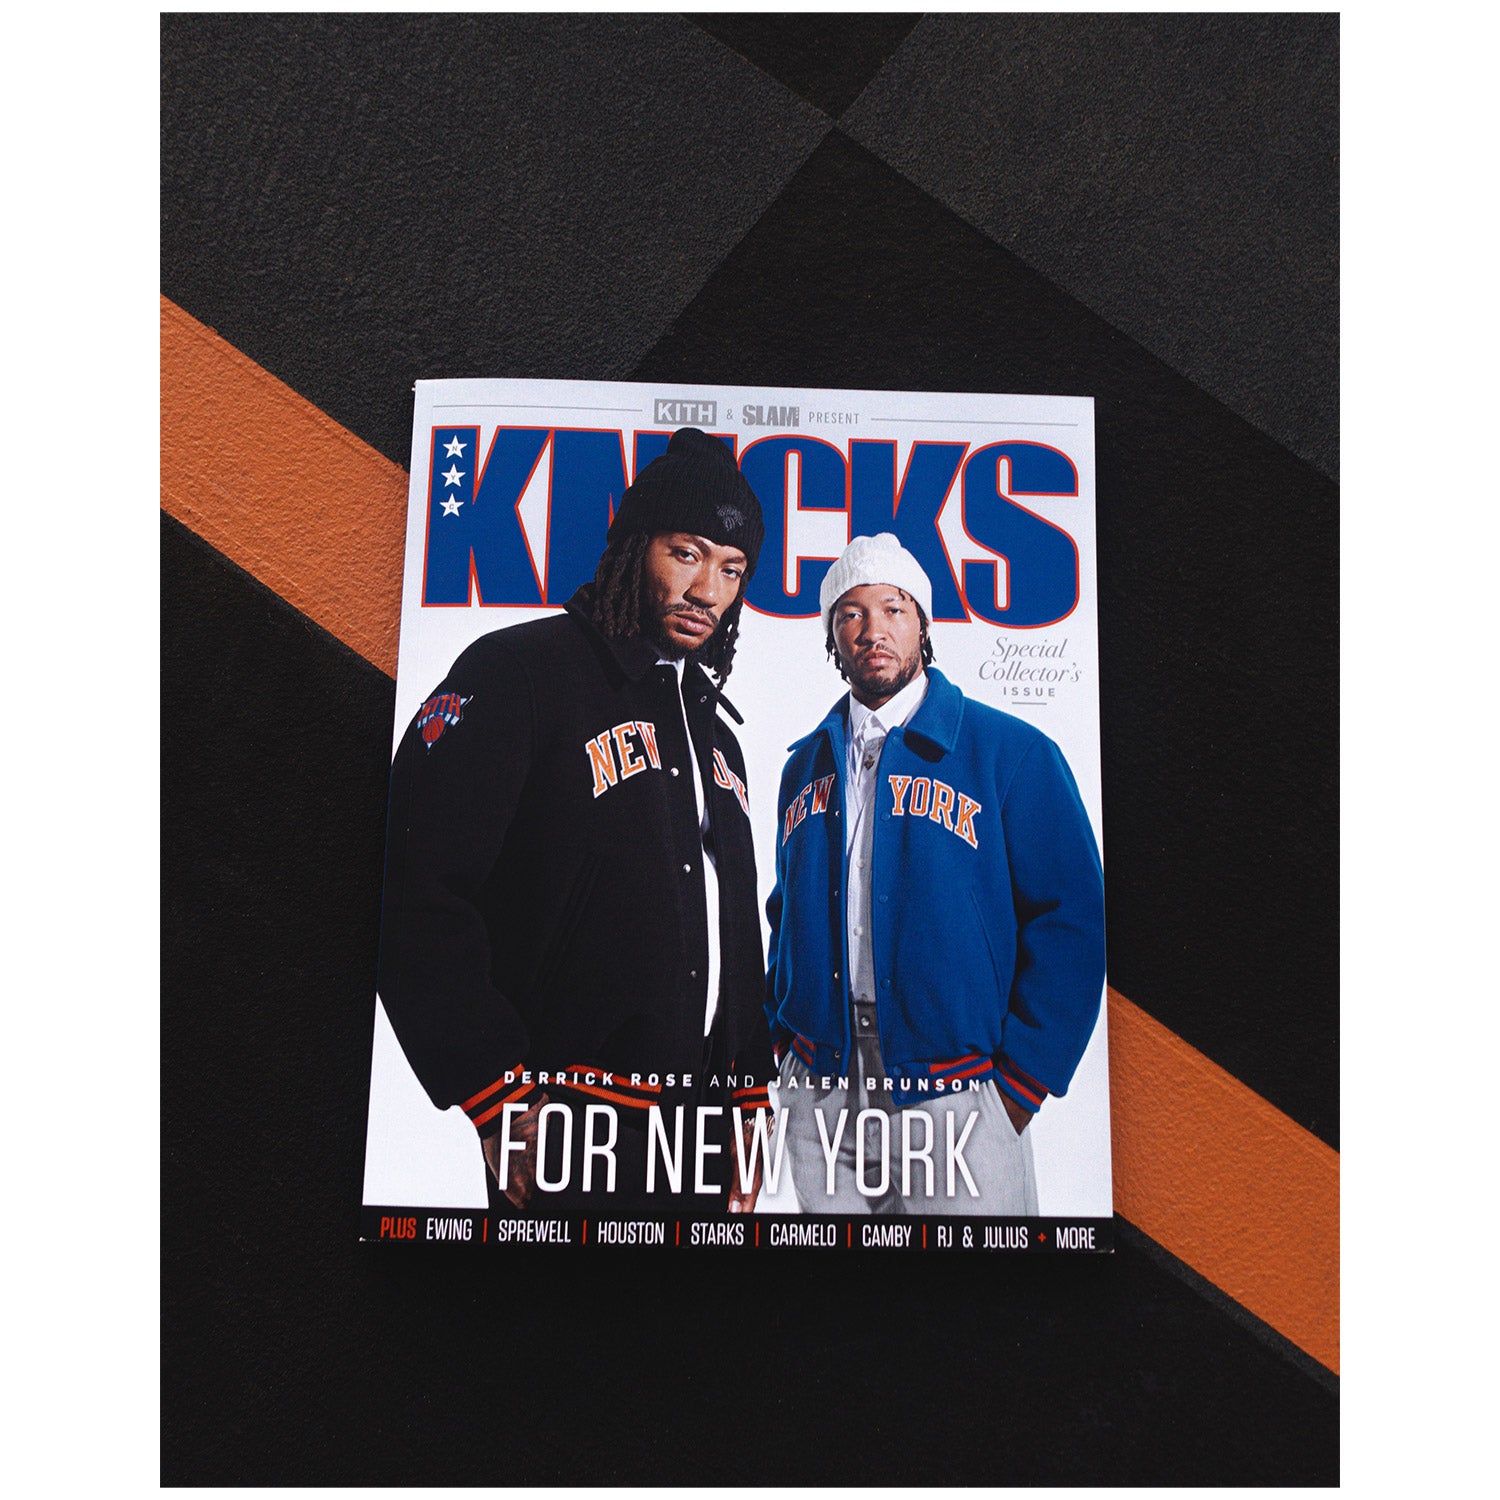 Kith New York Knicks Basketball Vintage Tee Black